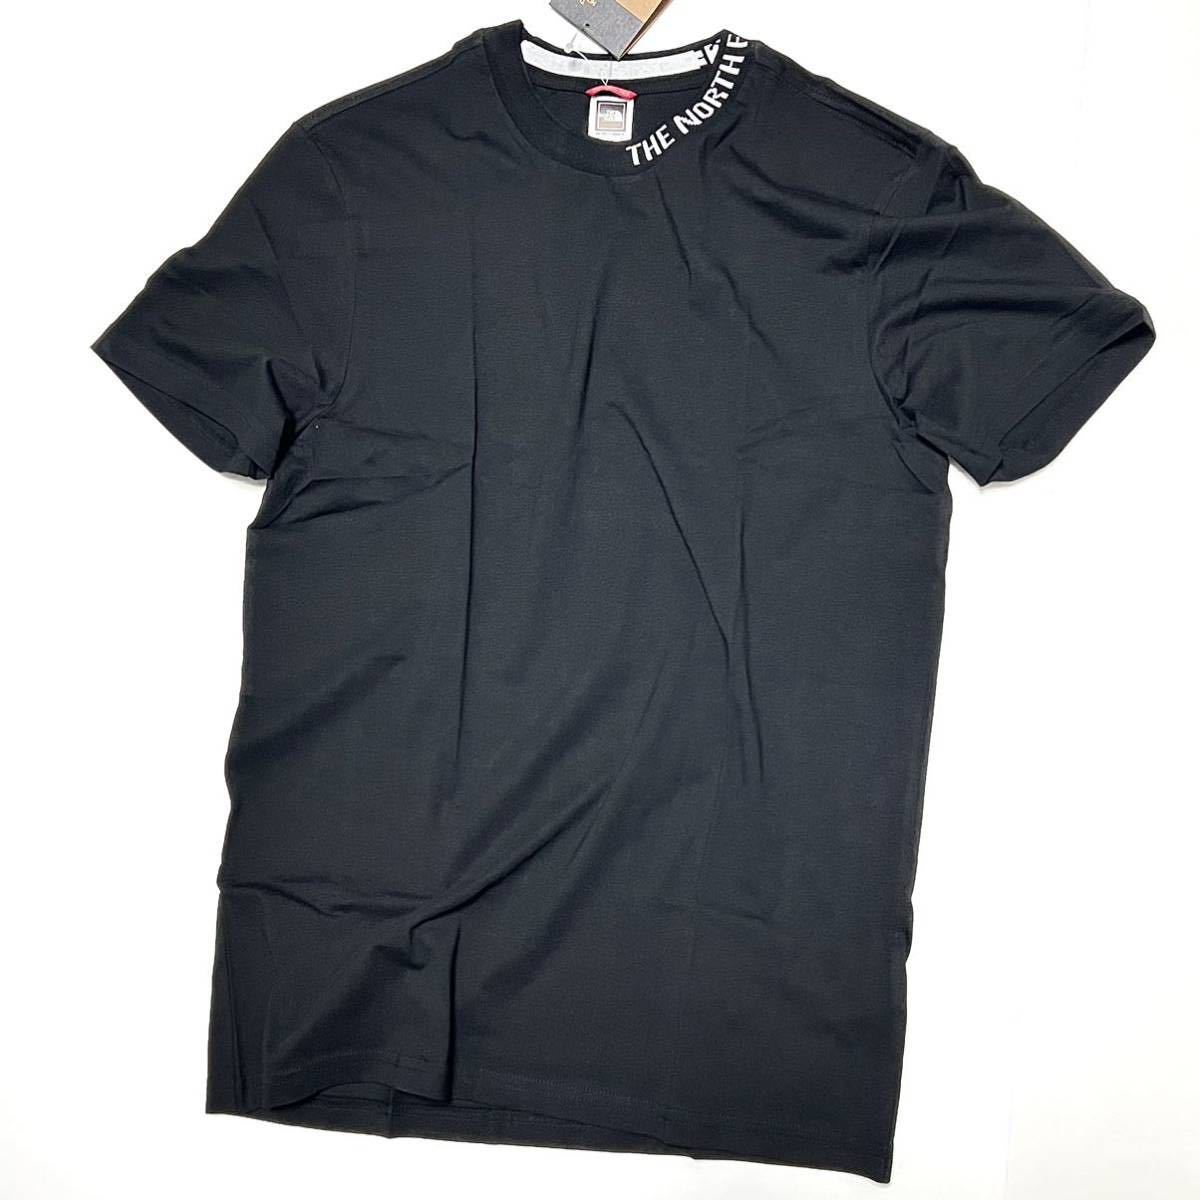 L 新品 海外限定 ノースフェイス オーバーサイズ ネックロゴ Tシャツ 黒 襟ロゴ ブラック ネック 襟元ロゴ 日本未発売 ロゴT ZUMU TEE